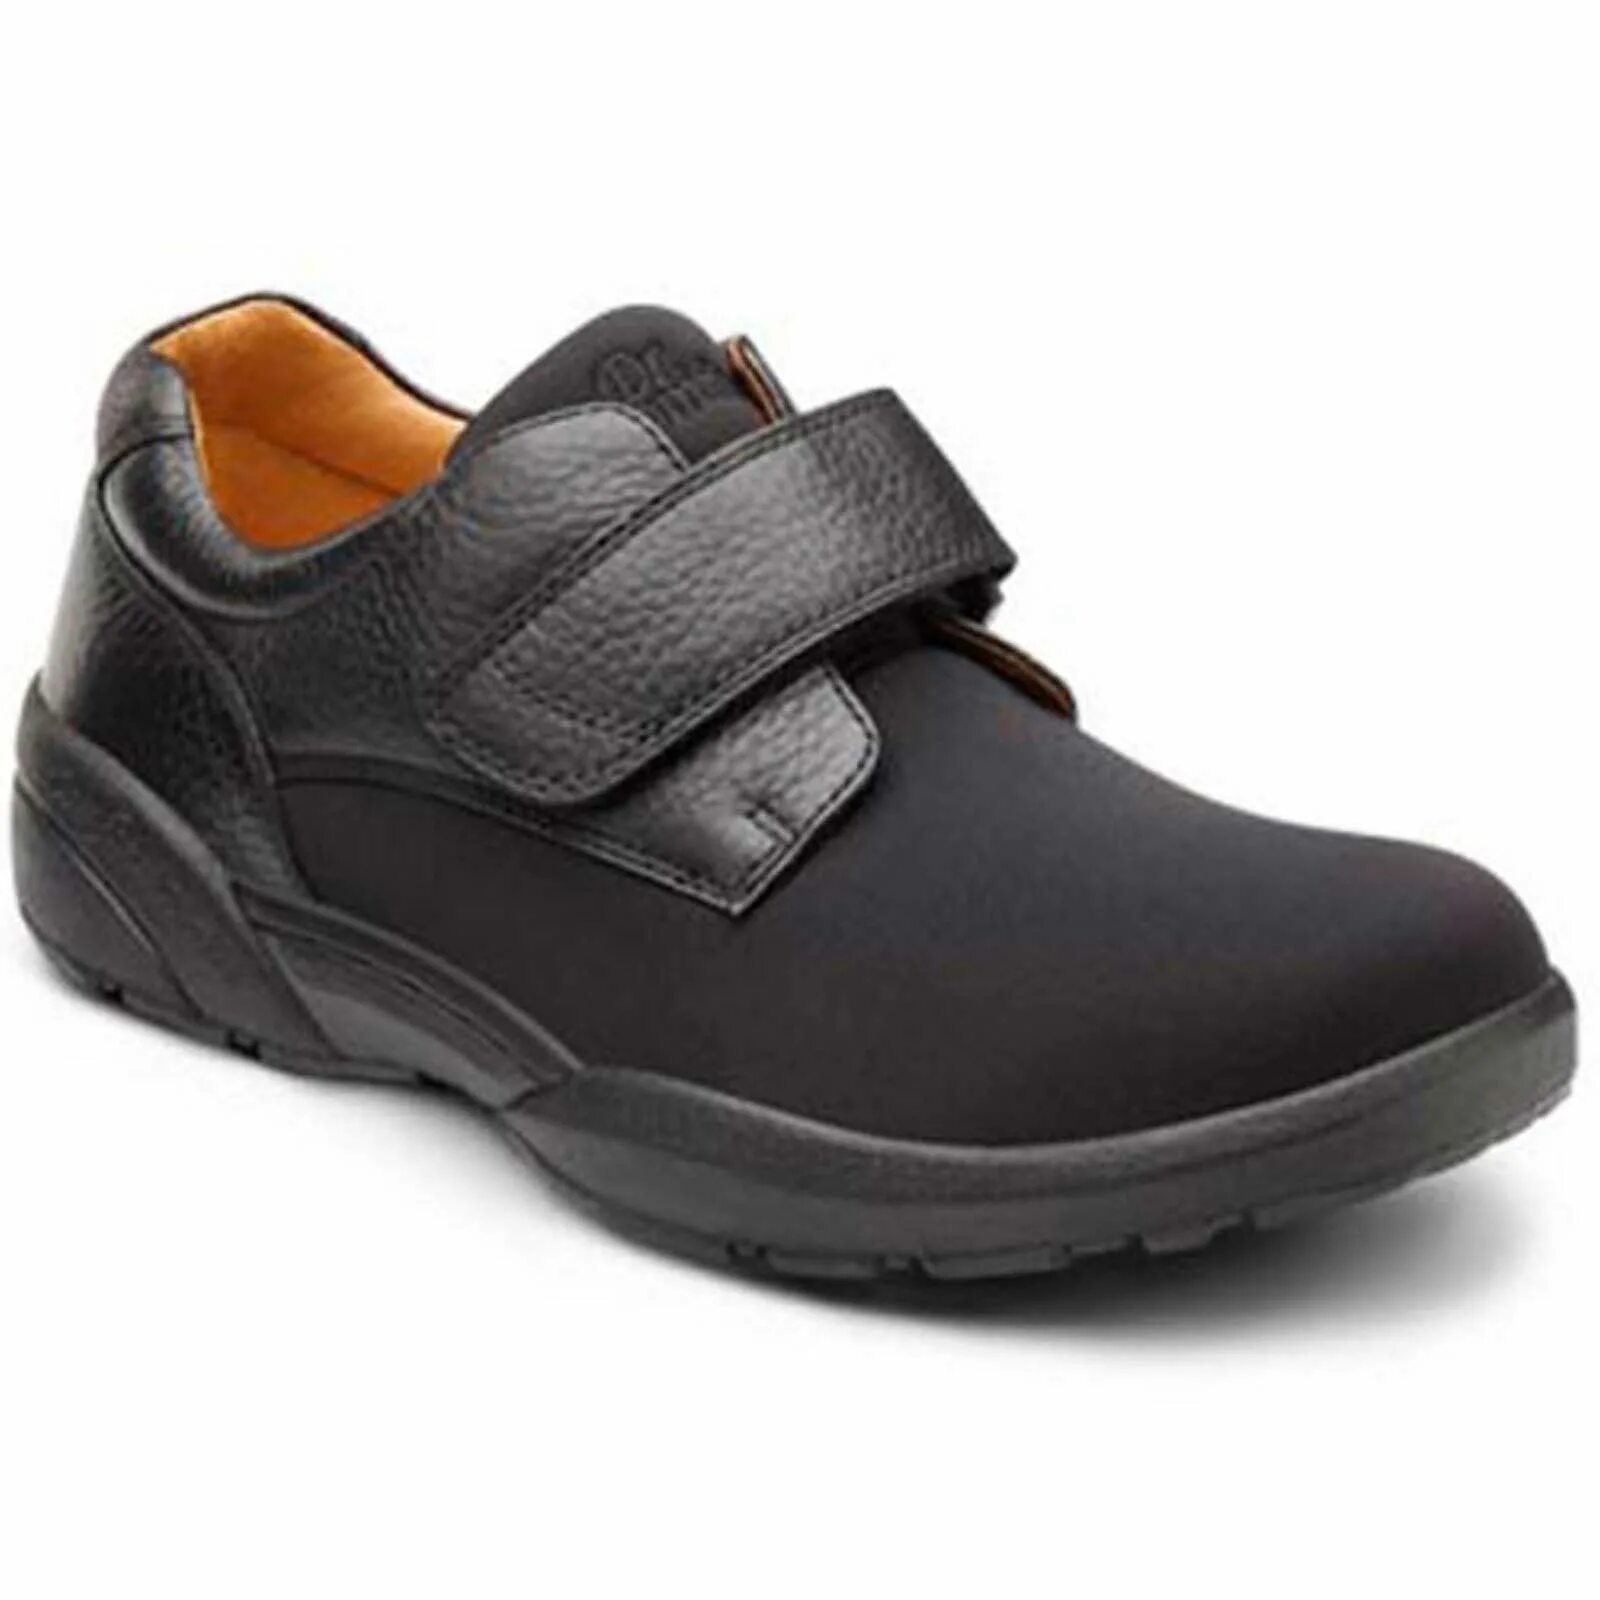 Купить обувь доктору. Diabetic Shoe. Comfort Shoes. Velcro Shoes. German Orthopedic Shoes.